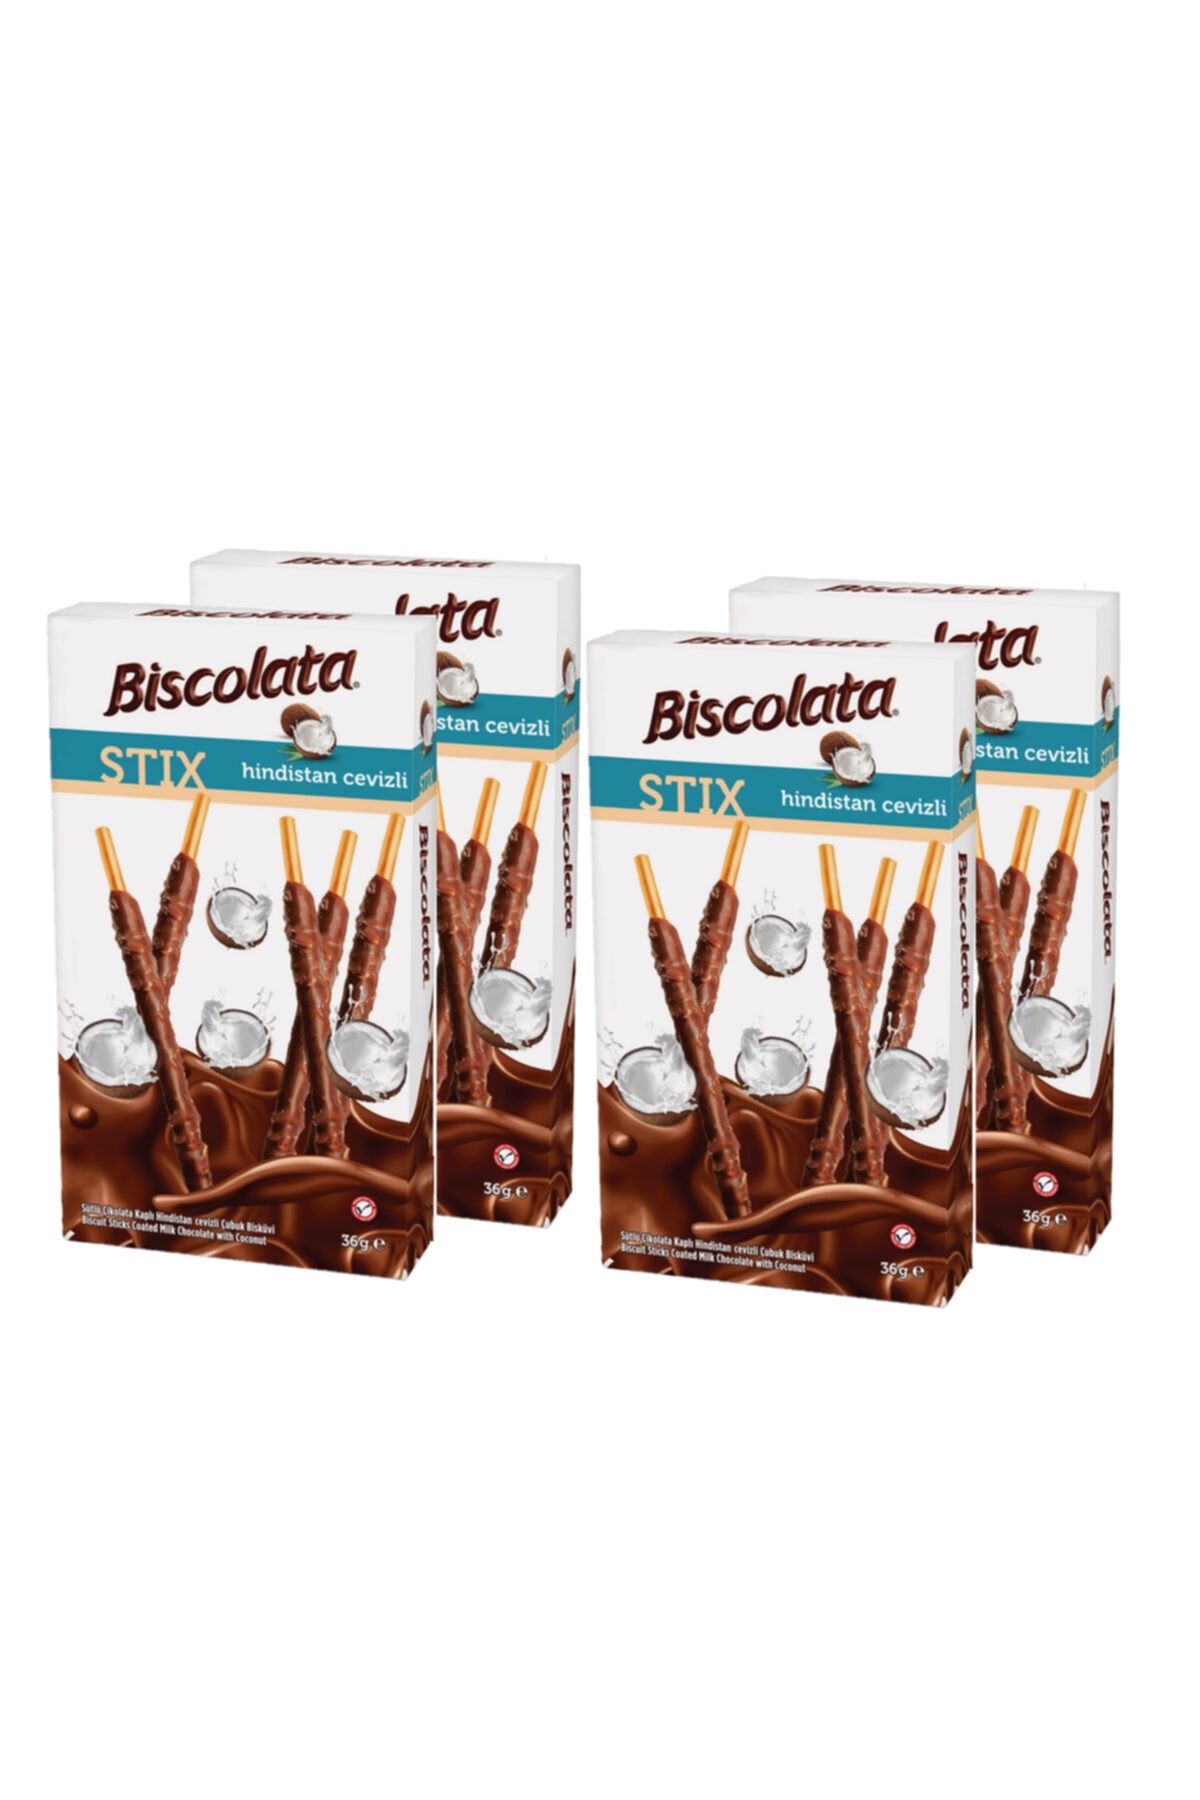 Biscolata Bıscolata Stıx Hindistan Cevizli 36 Gr 4 Adet